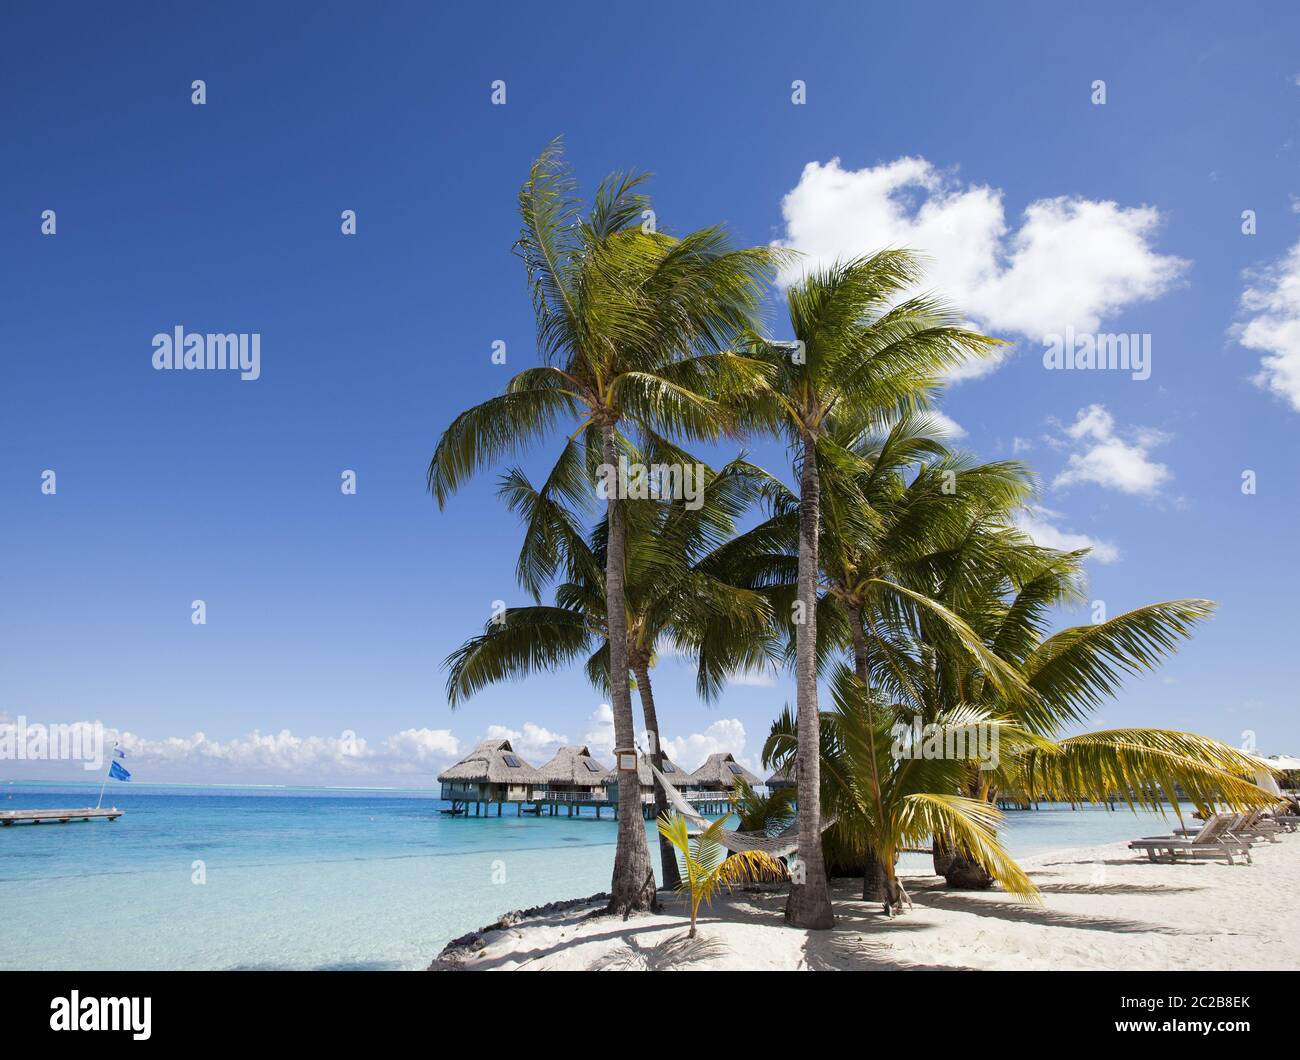 View of the sandy beach with palm trees and hammok, Bora Bora, French Polynesia Stock Photo